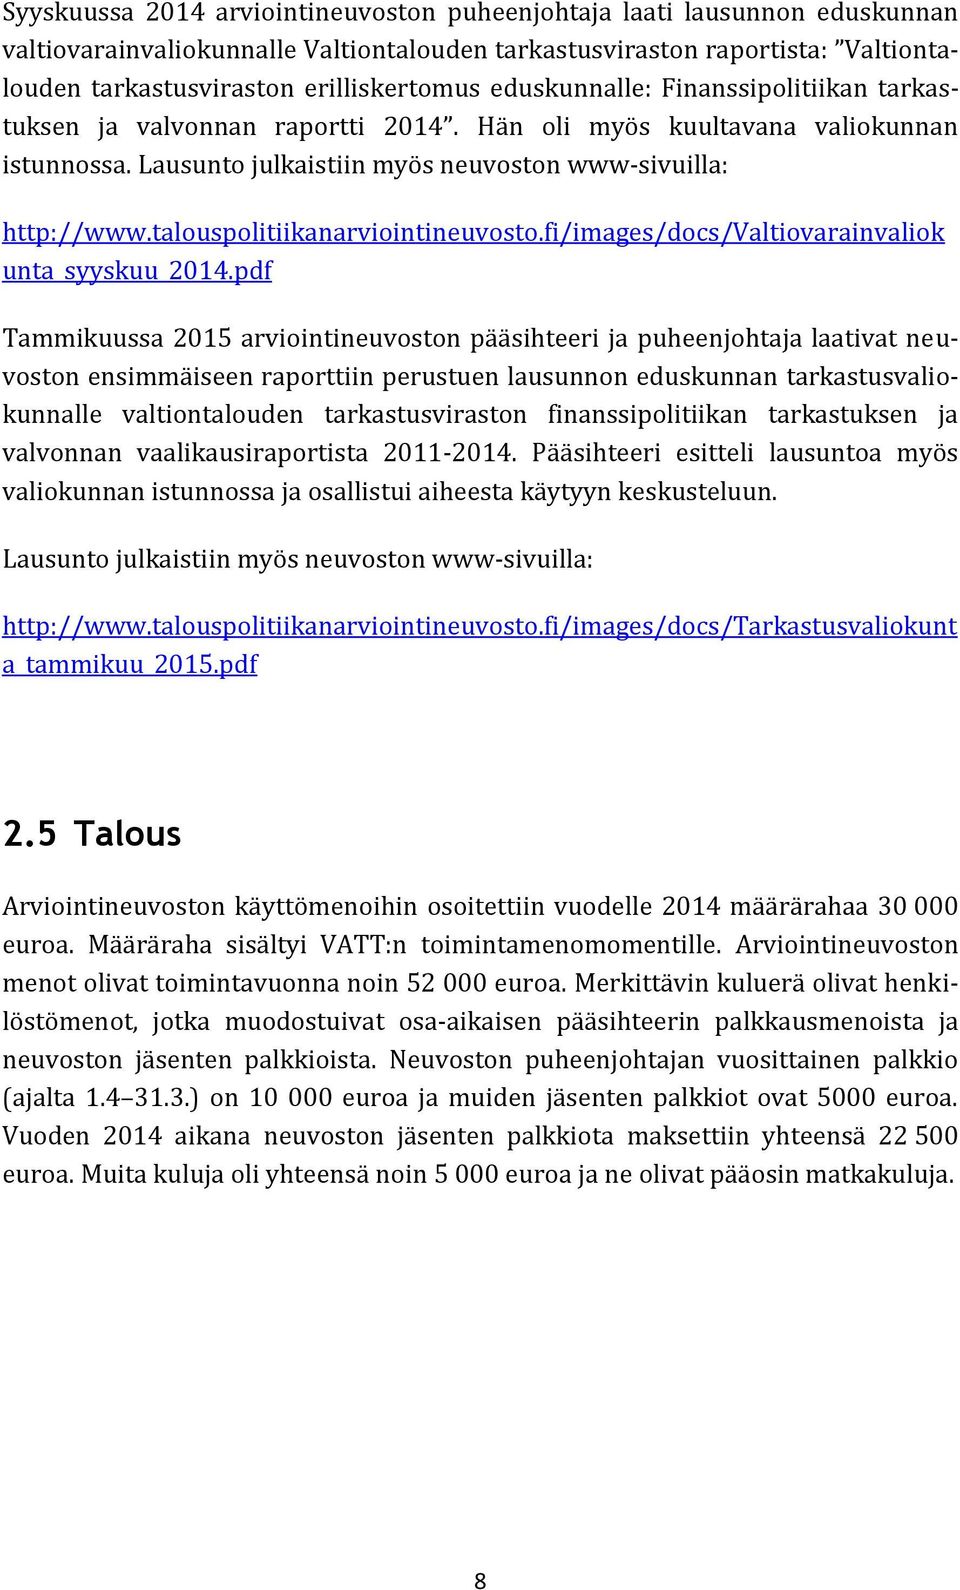 talouspolitiikanarviointineuvosto.fi/images/docs/valtiovarainvaliok unta_syyskuu_2014.